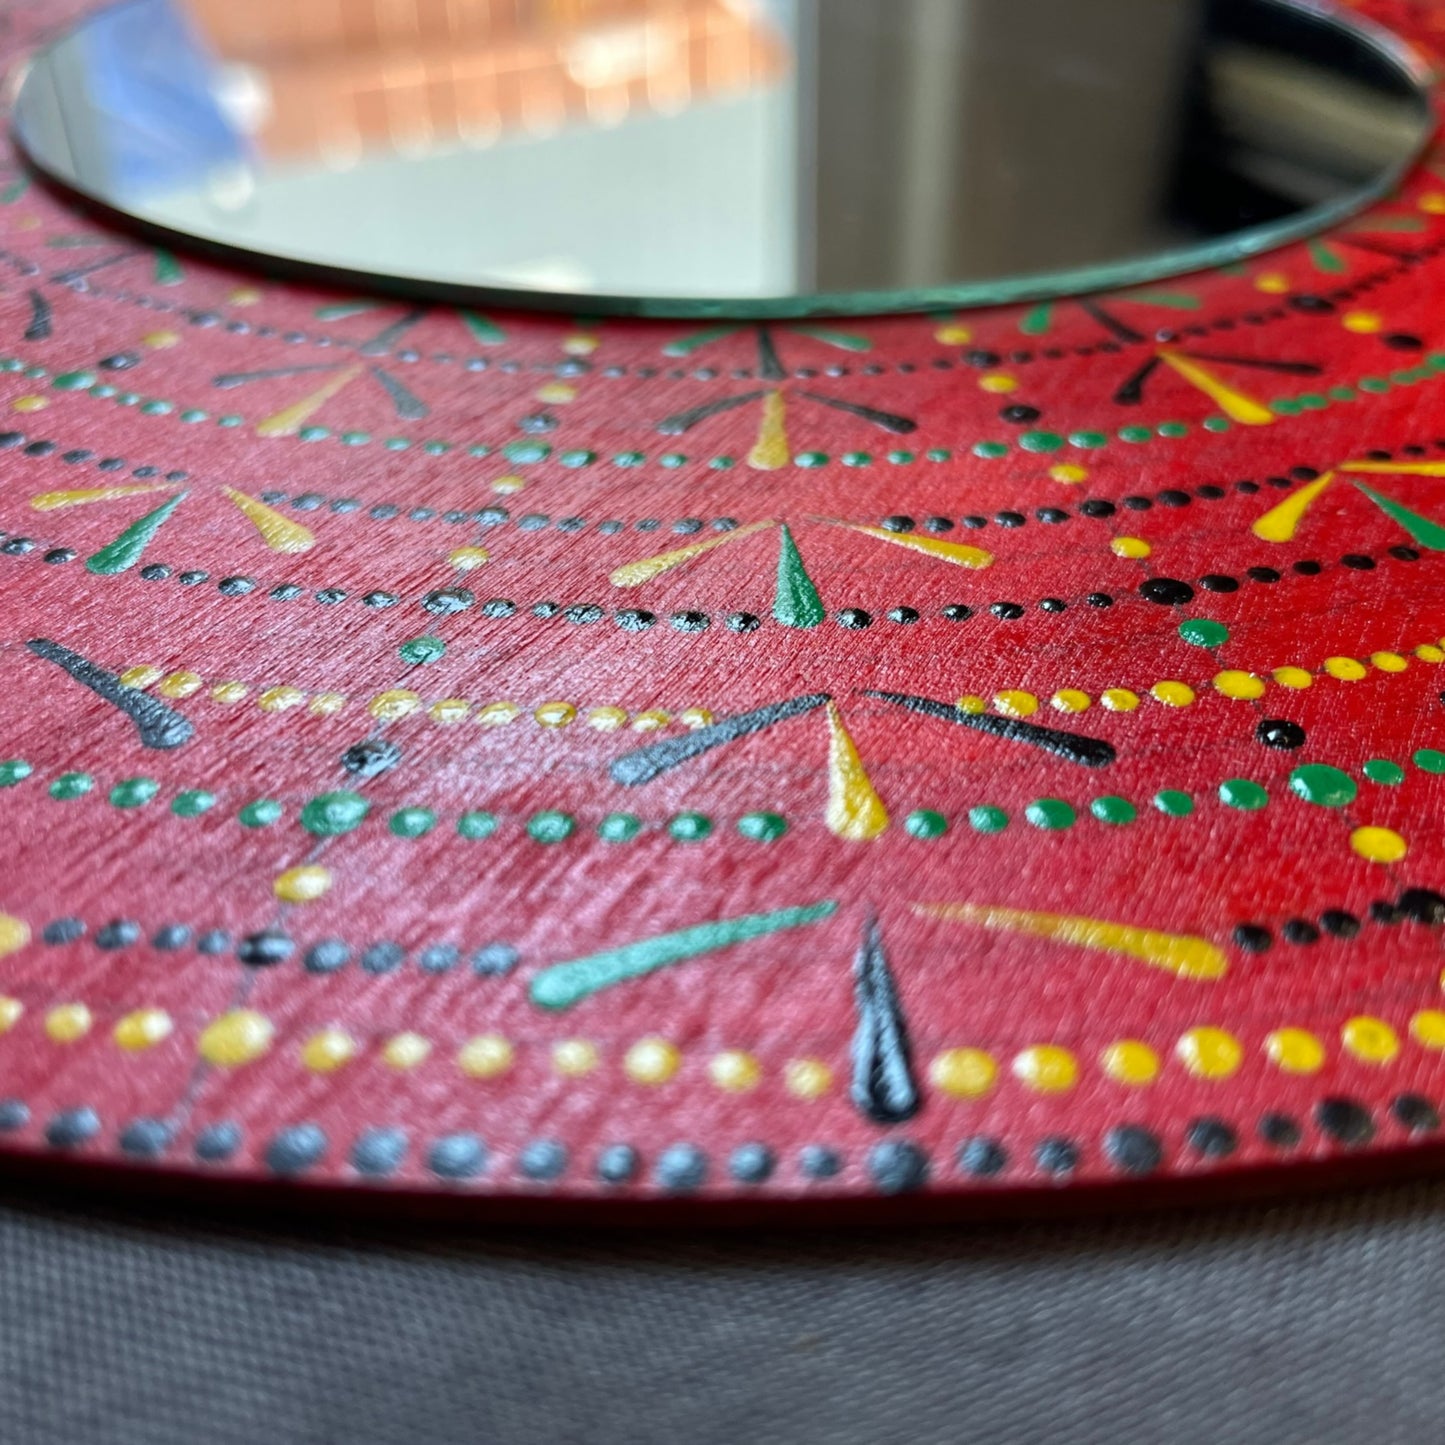 Decorative Mirror with Mandala Style Dot Art Handmade